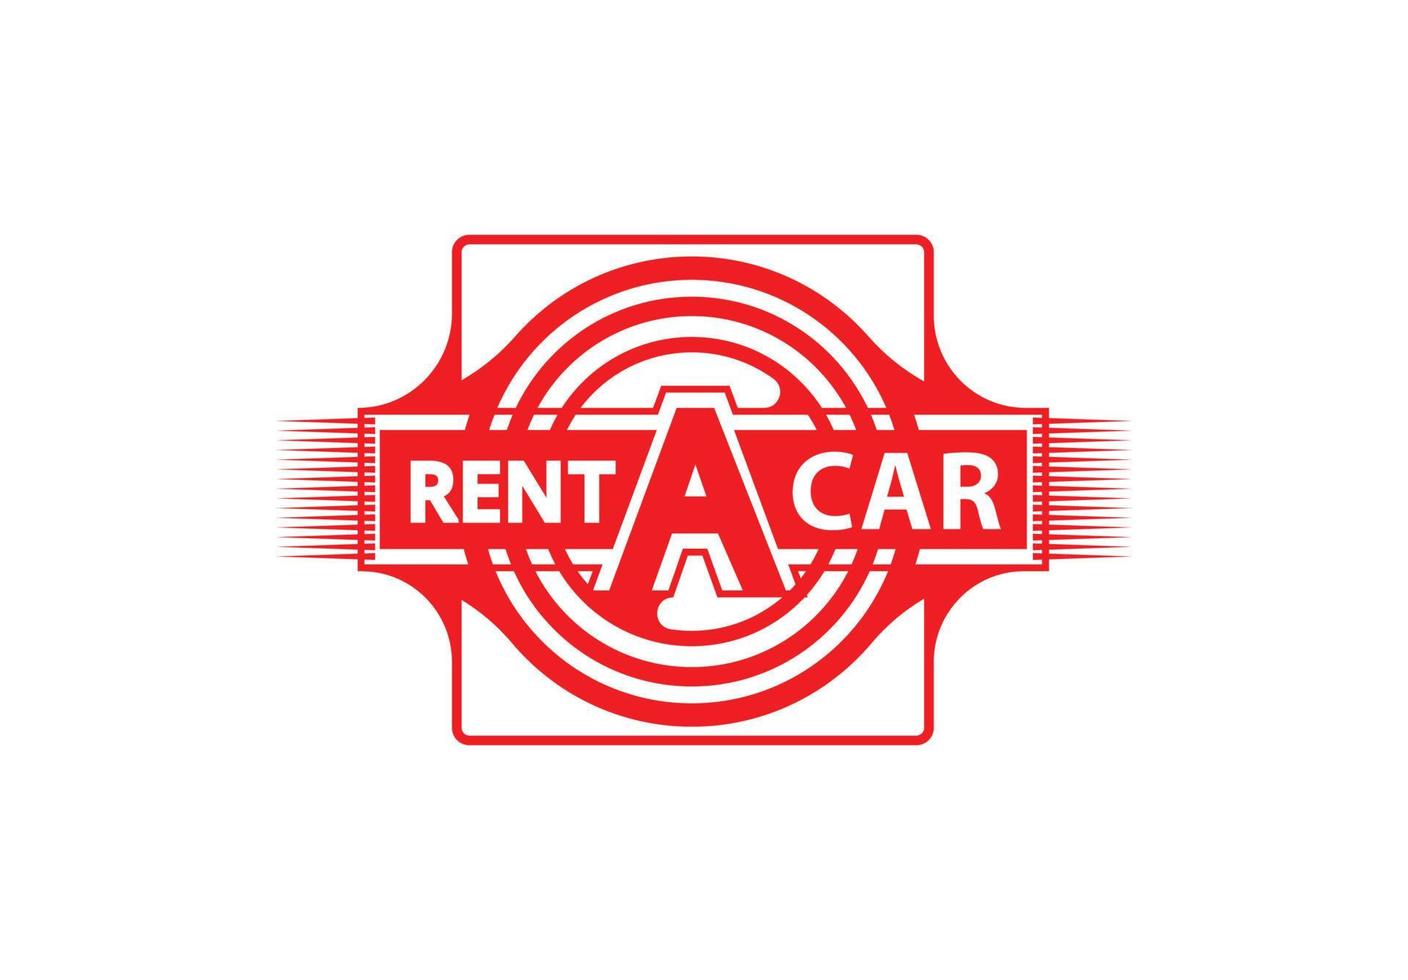 Rent a car logo and icon design template vector